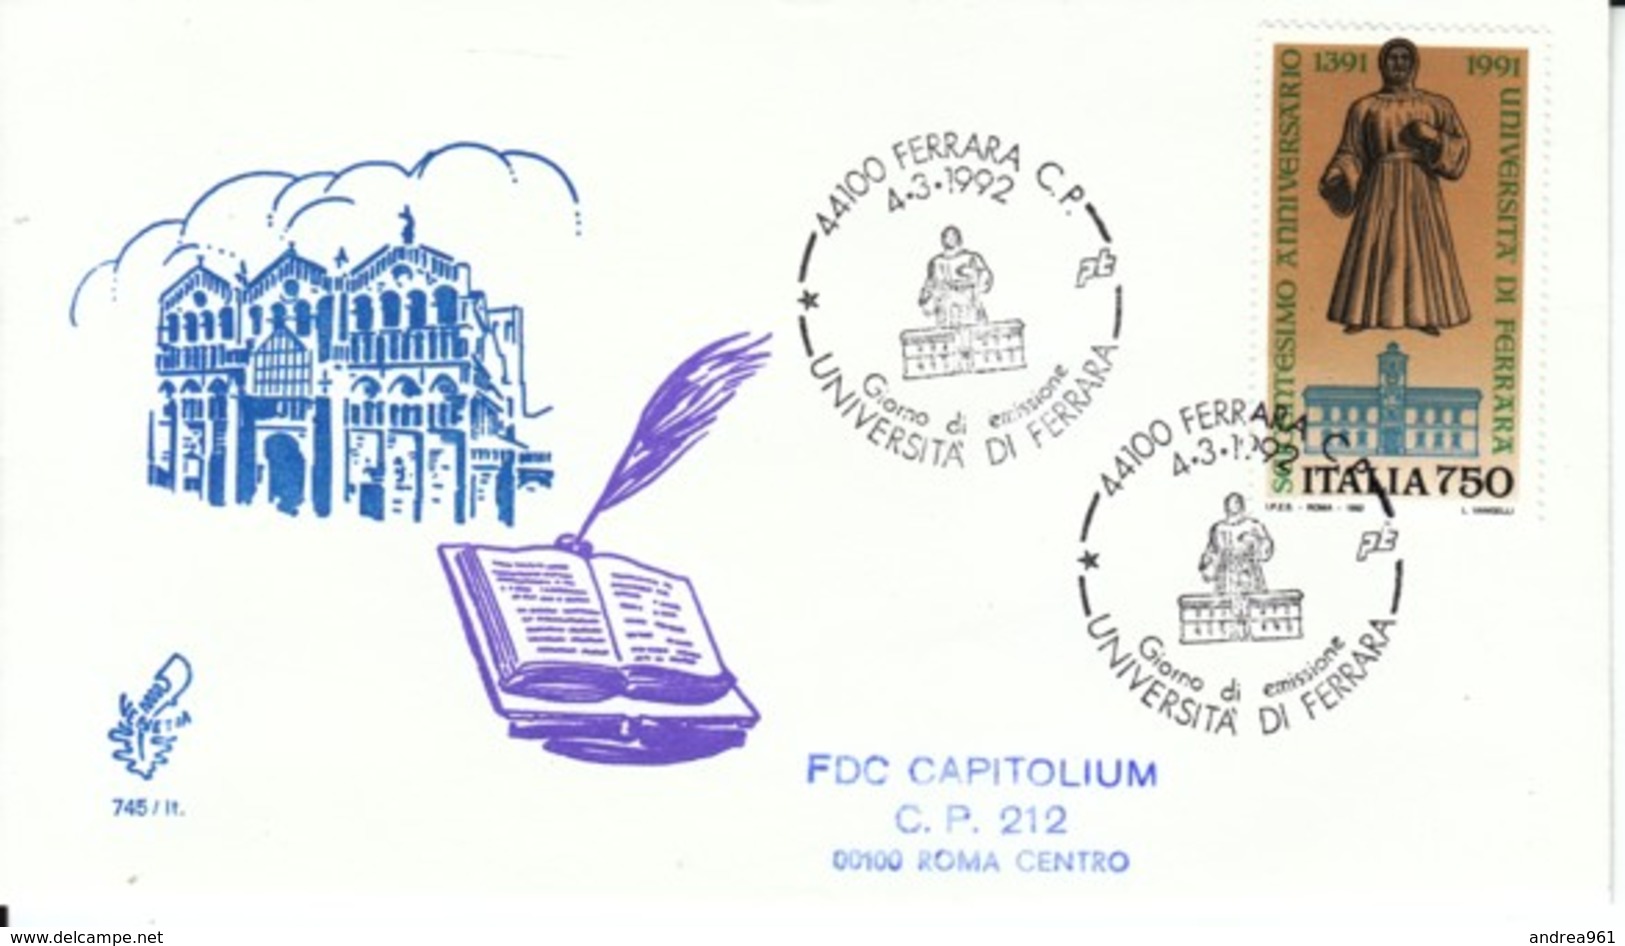 1992 - UNIVERSITA' DI FERRARA - FDC VENETIA - FDC